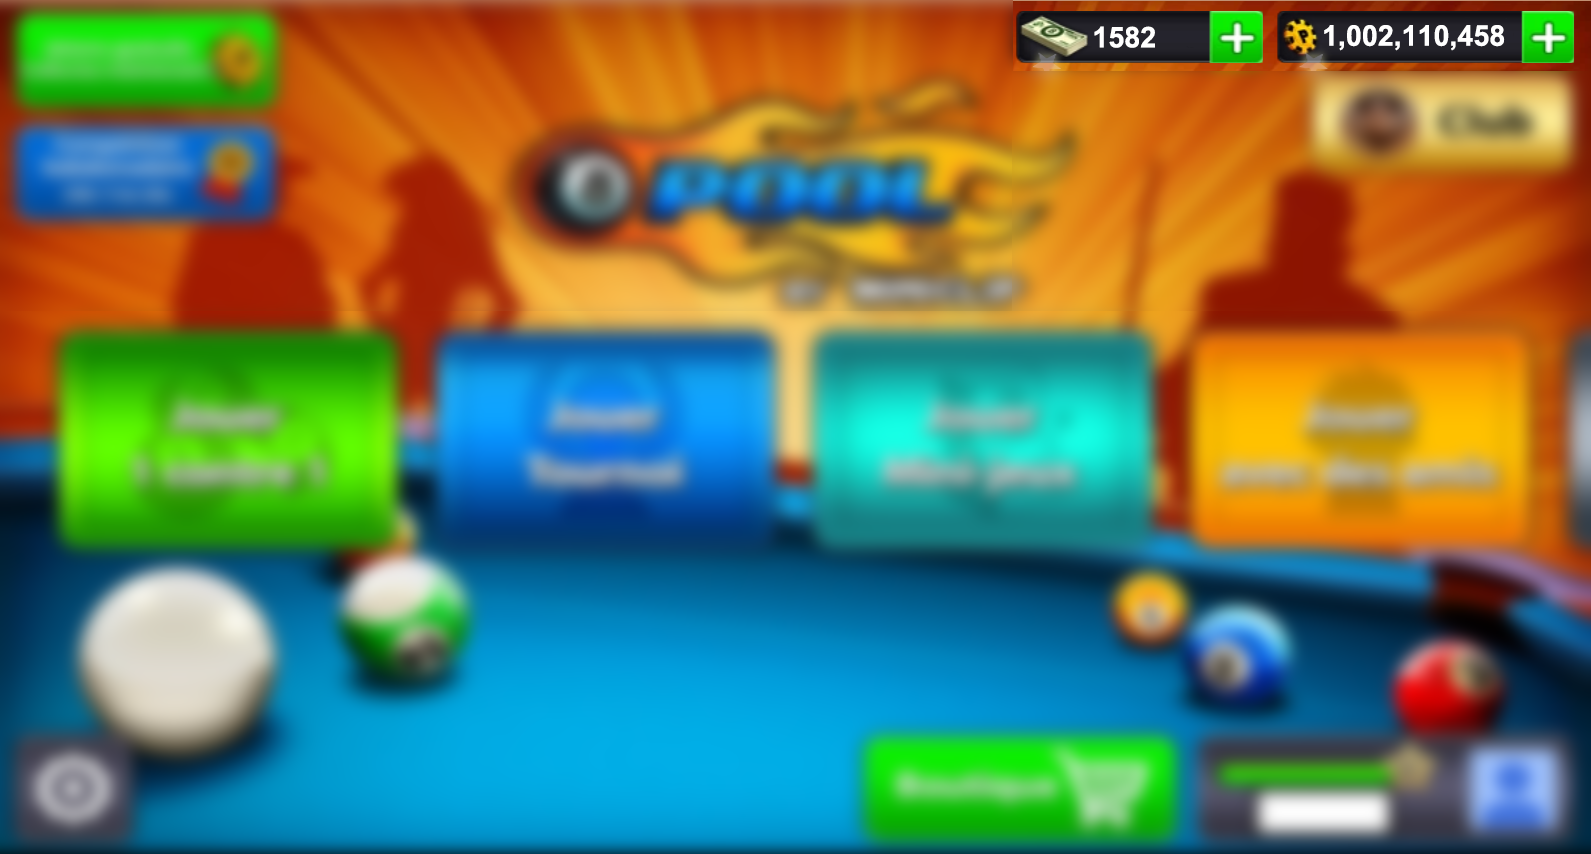 8Ball.Cc 8 Ball Pool Rewards By Hasty Clicks - 8Ball.Gameapp ... - 